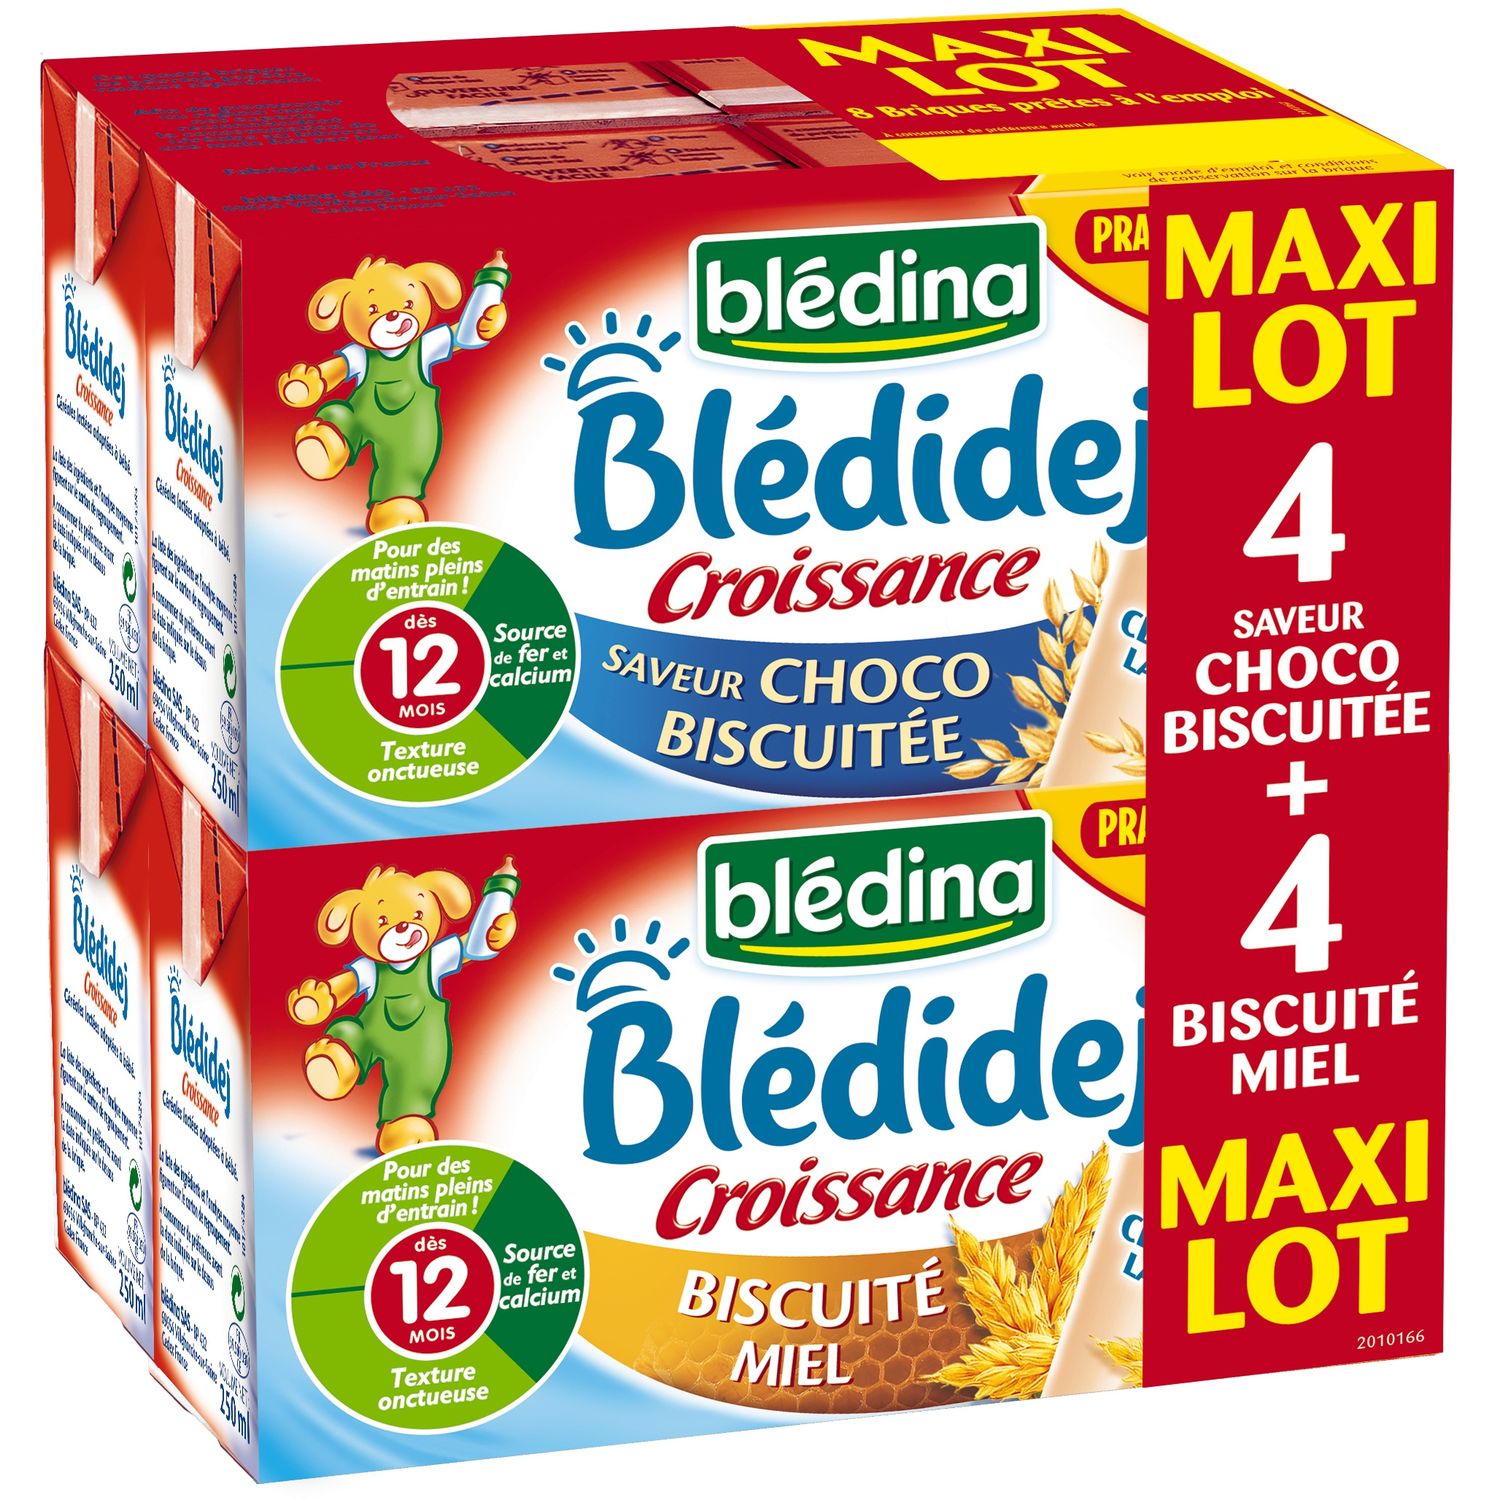 French Click - Bledina Bledidej Croissance Choco-Biscuite Brick 4x25cl